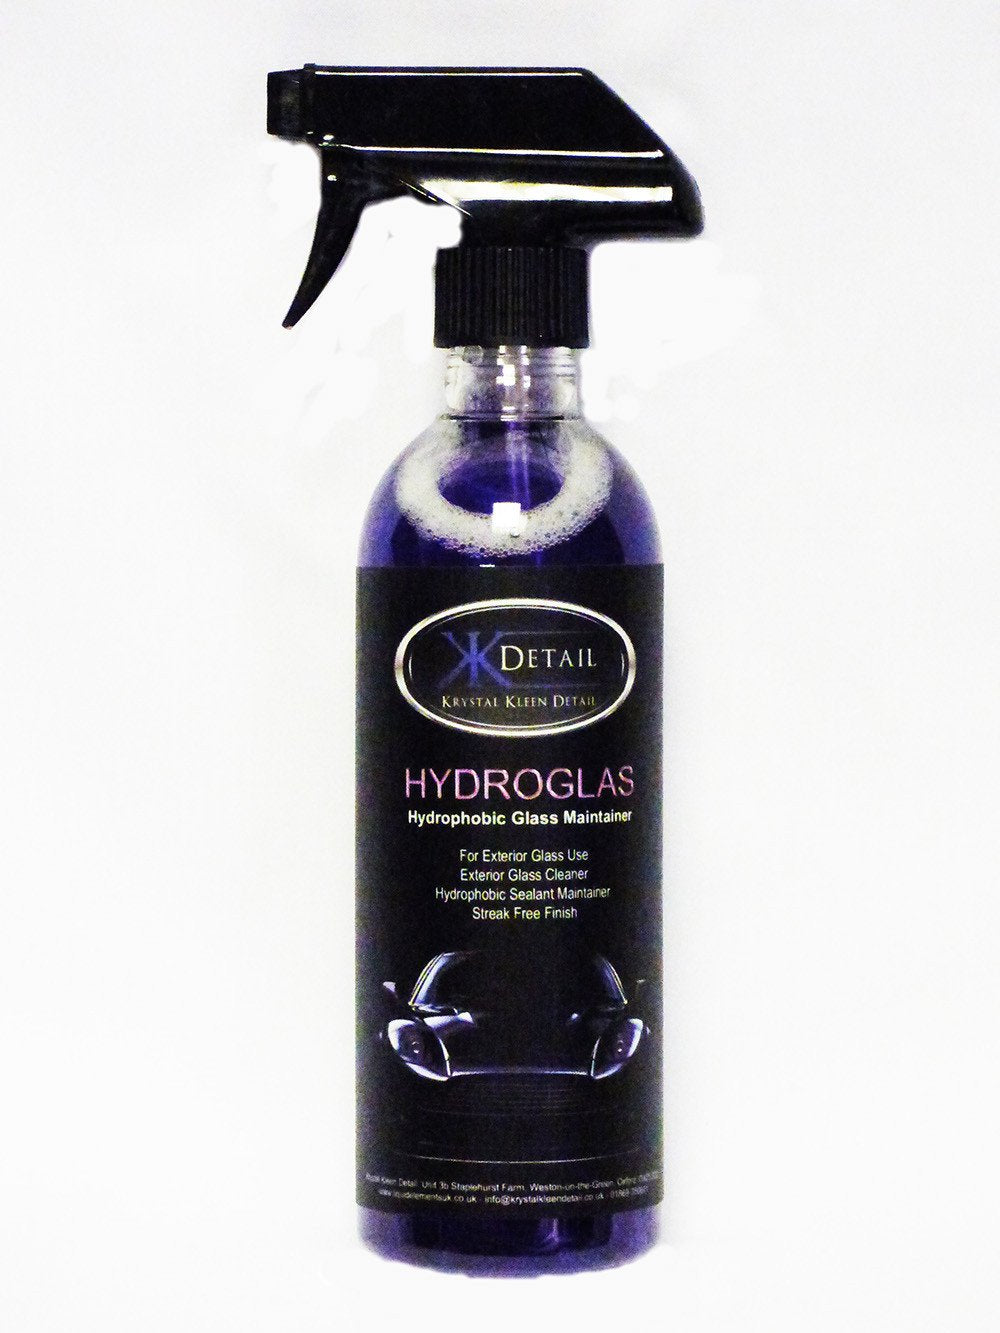 HYDROGLAS Hydrophobic Glass Cleaner